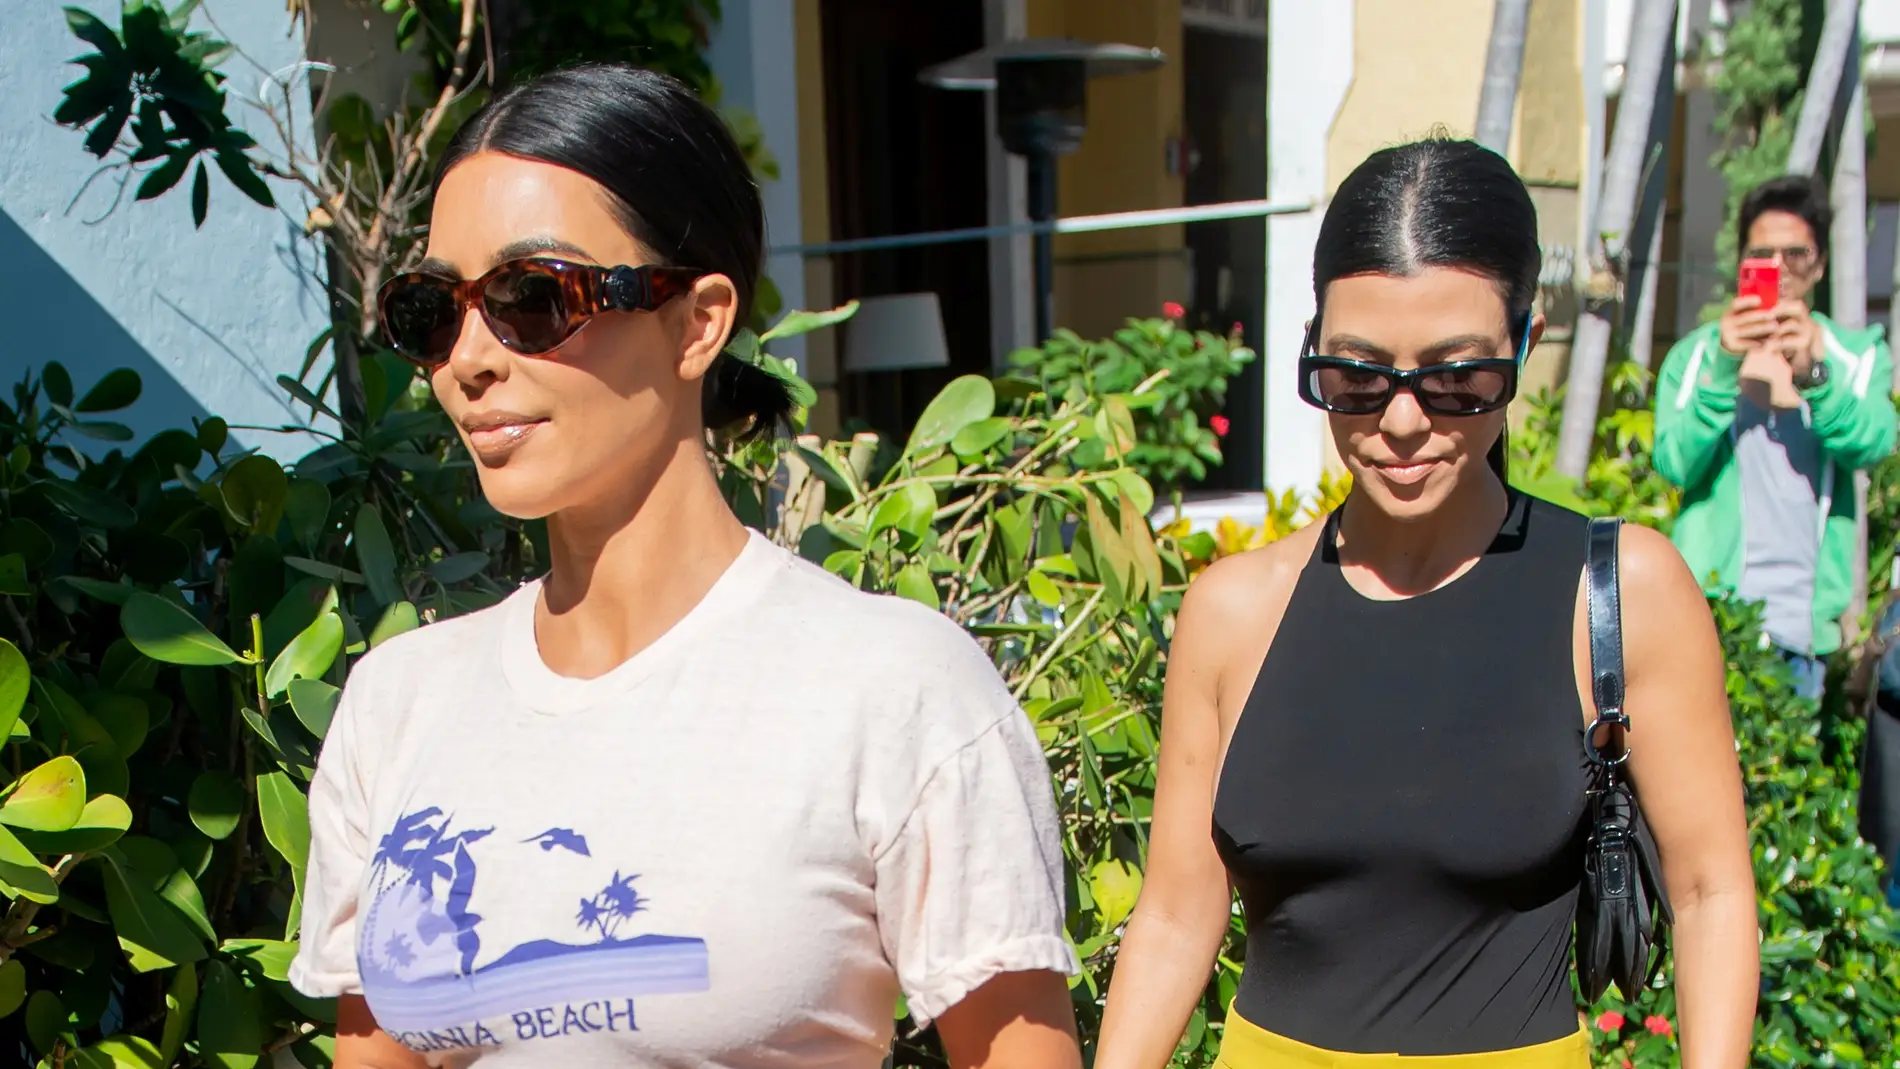 Kim Kardashian y su hermana Kourtney Kardashian